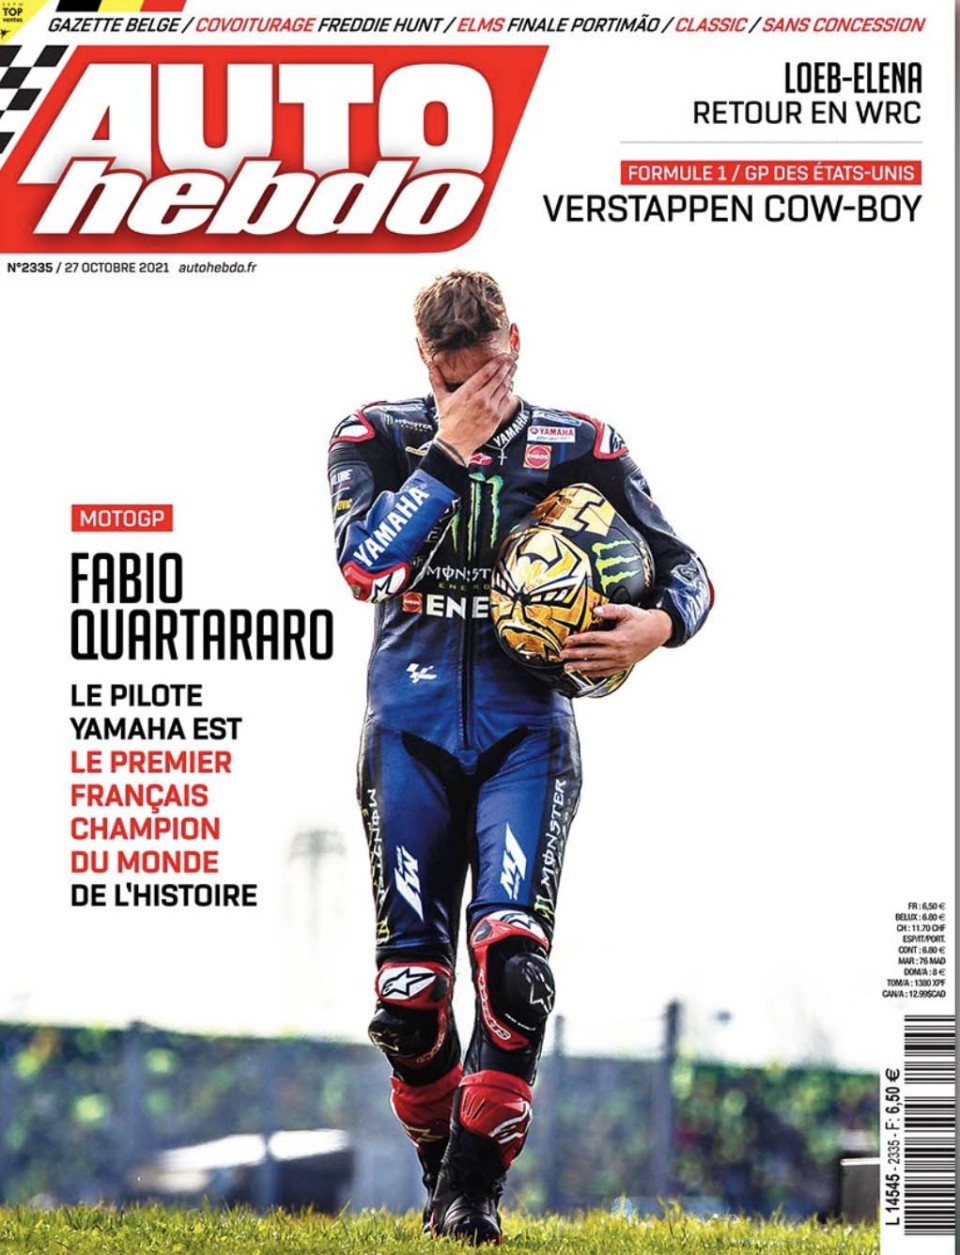 MotoGP: France honors Fabio Quartararo, the humble champion